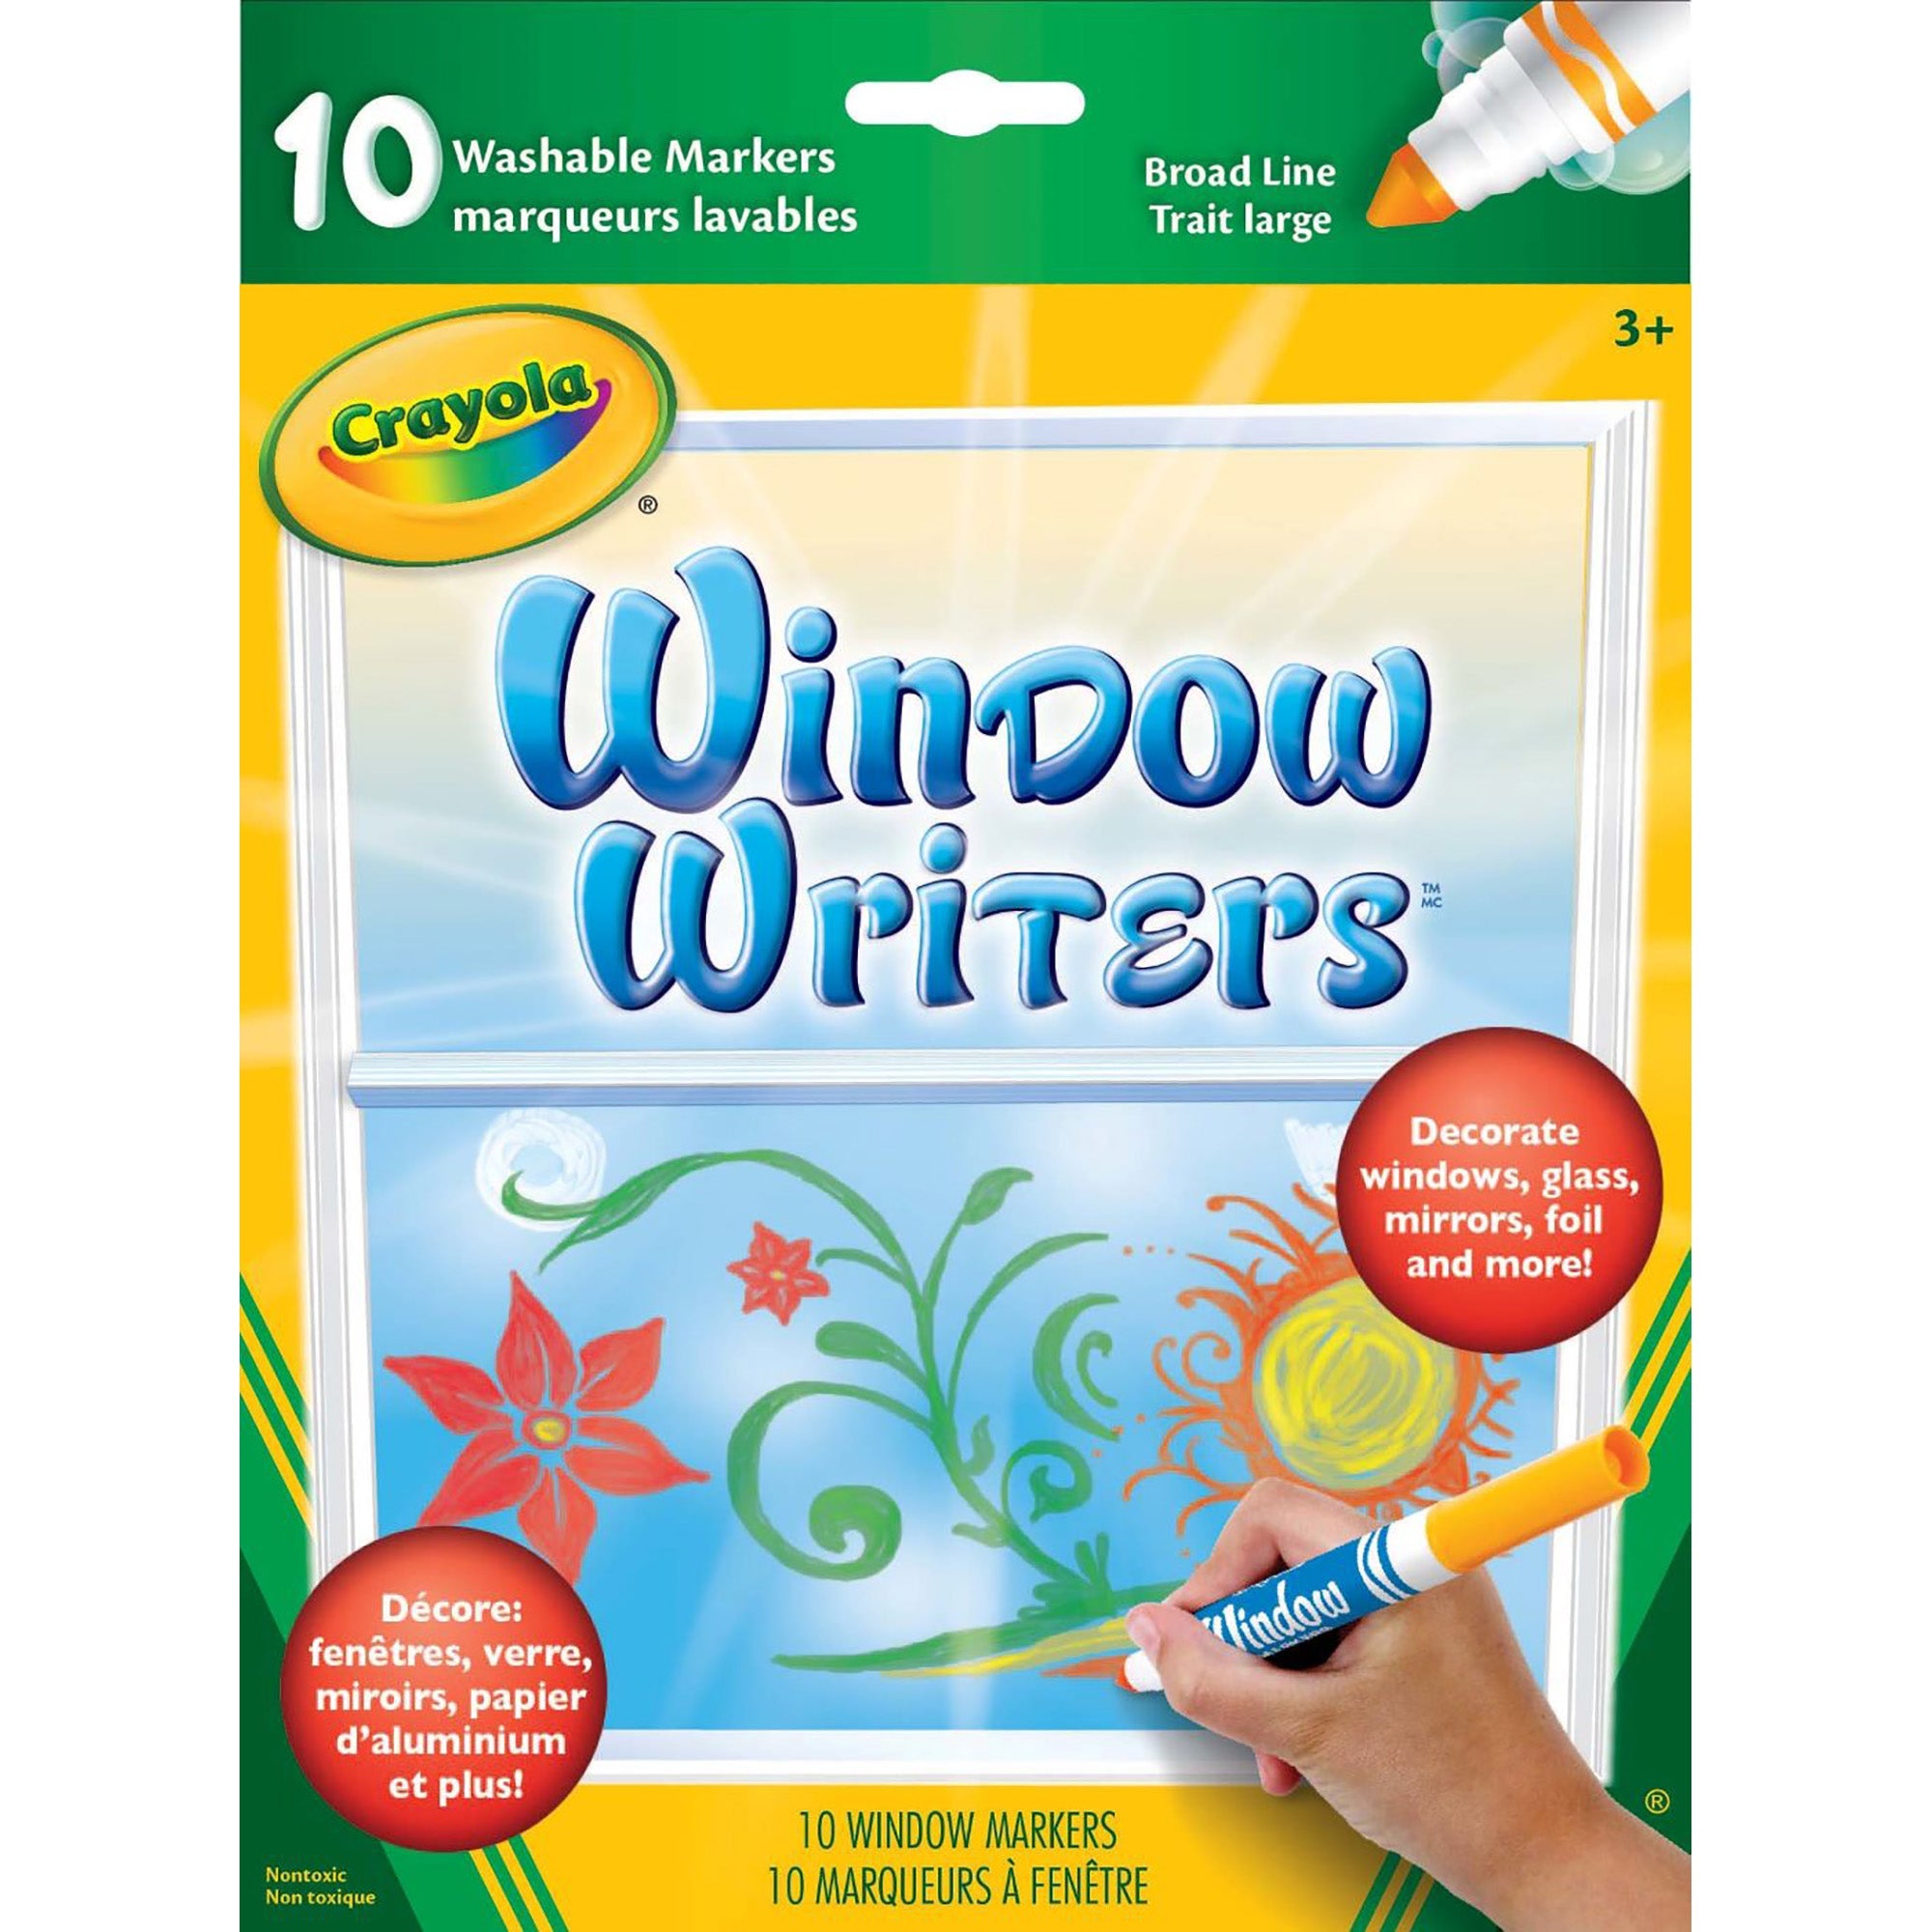 Crayola 10 Window Writers - Broad Line - Washable 